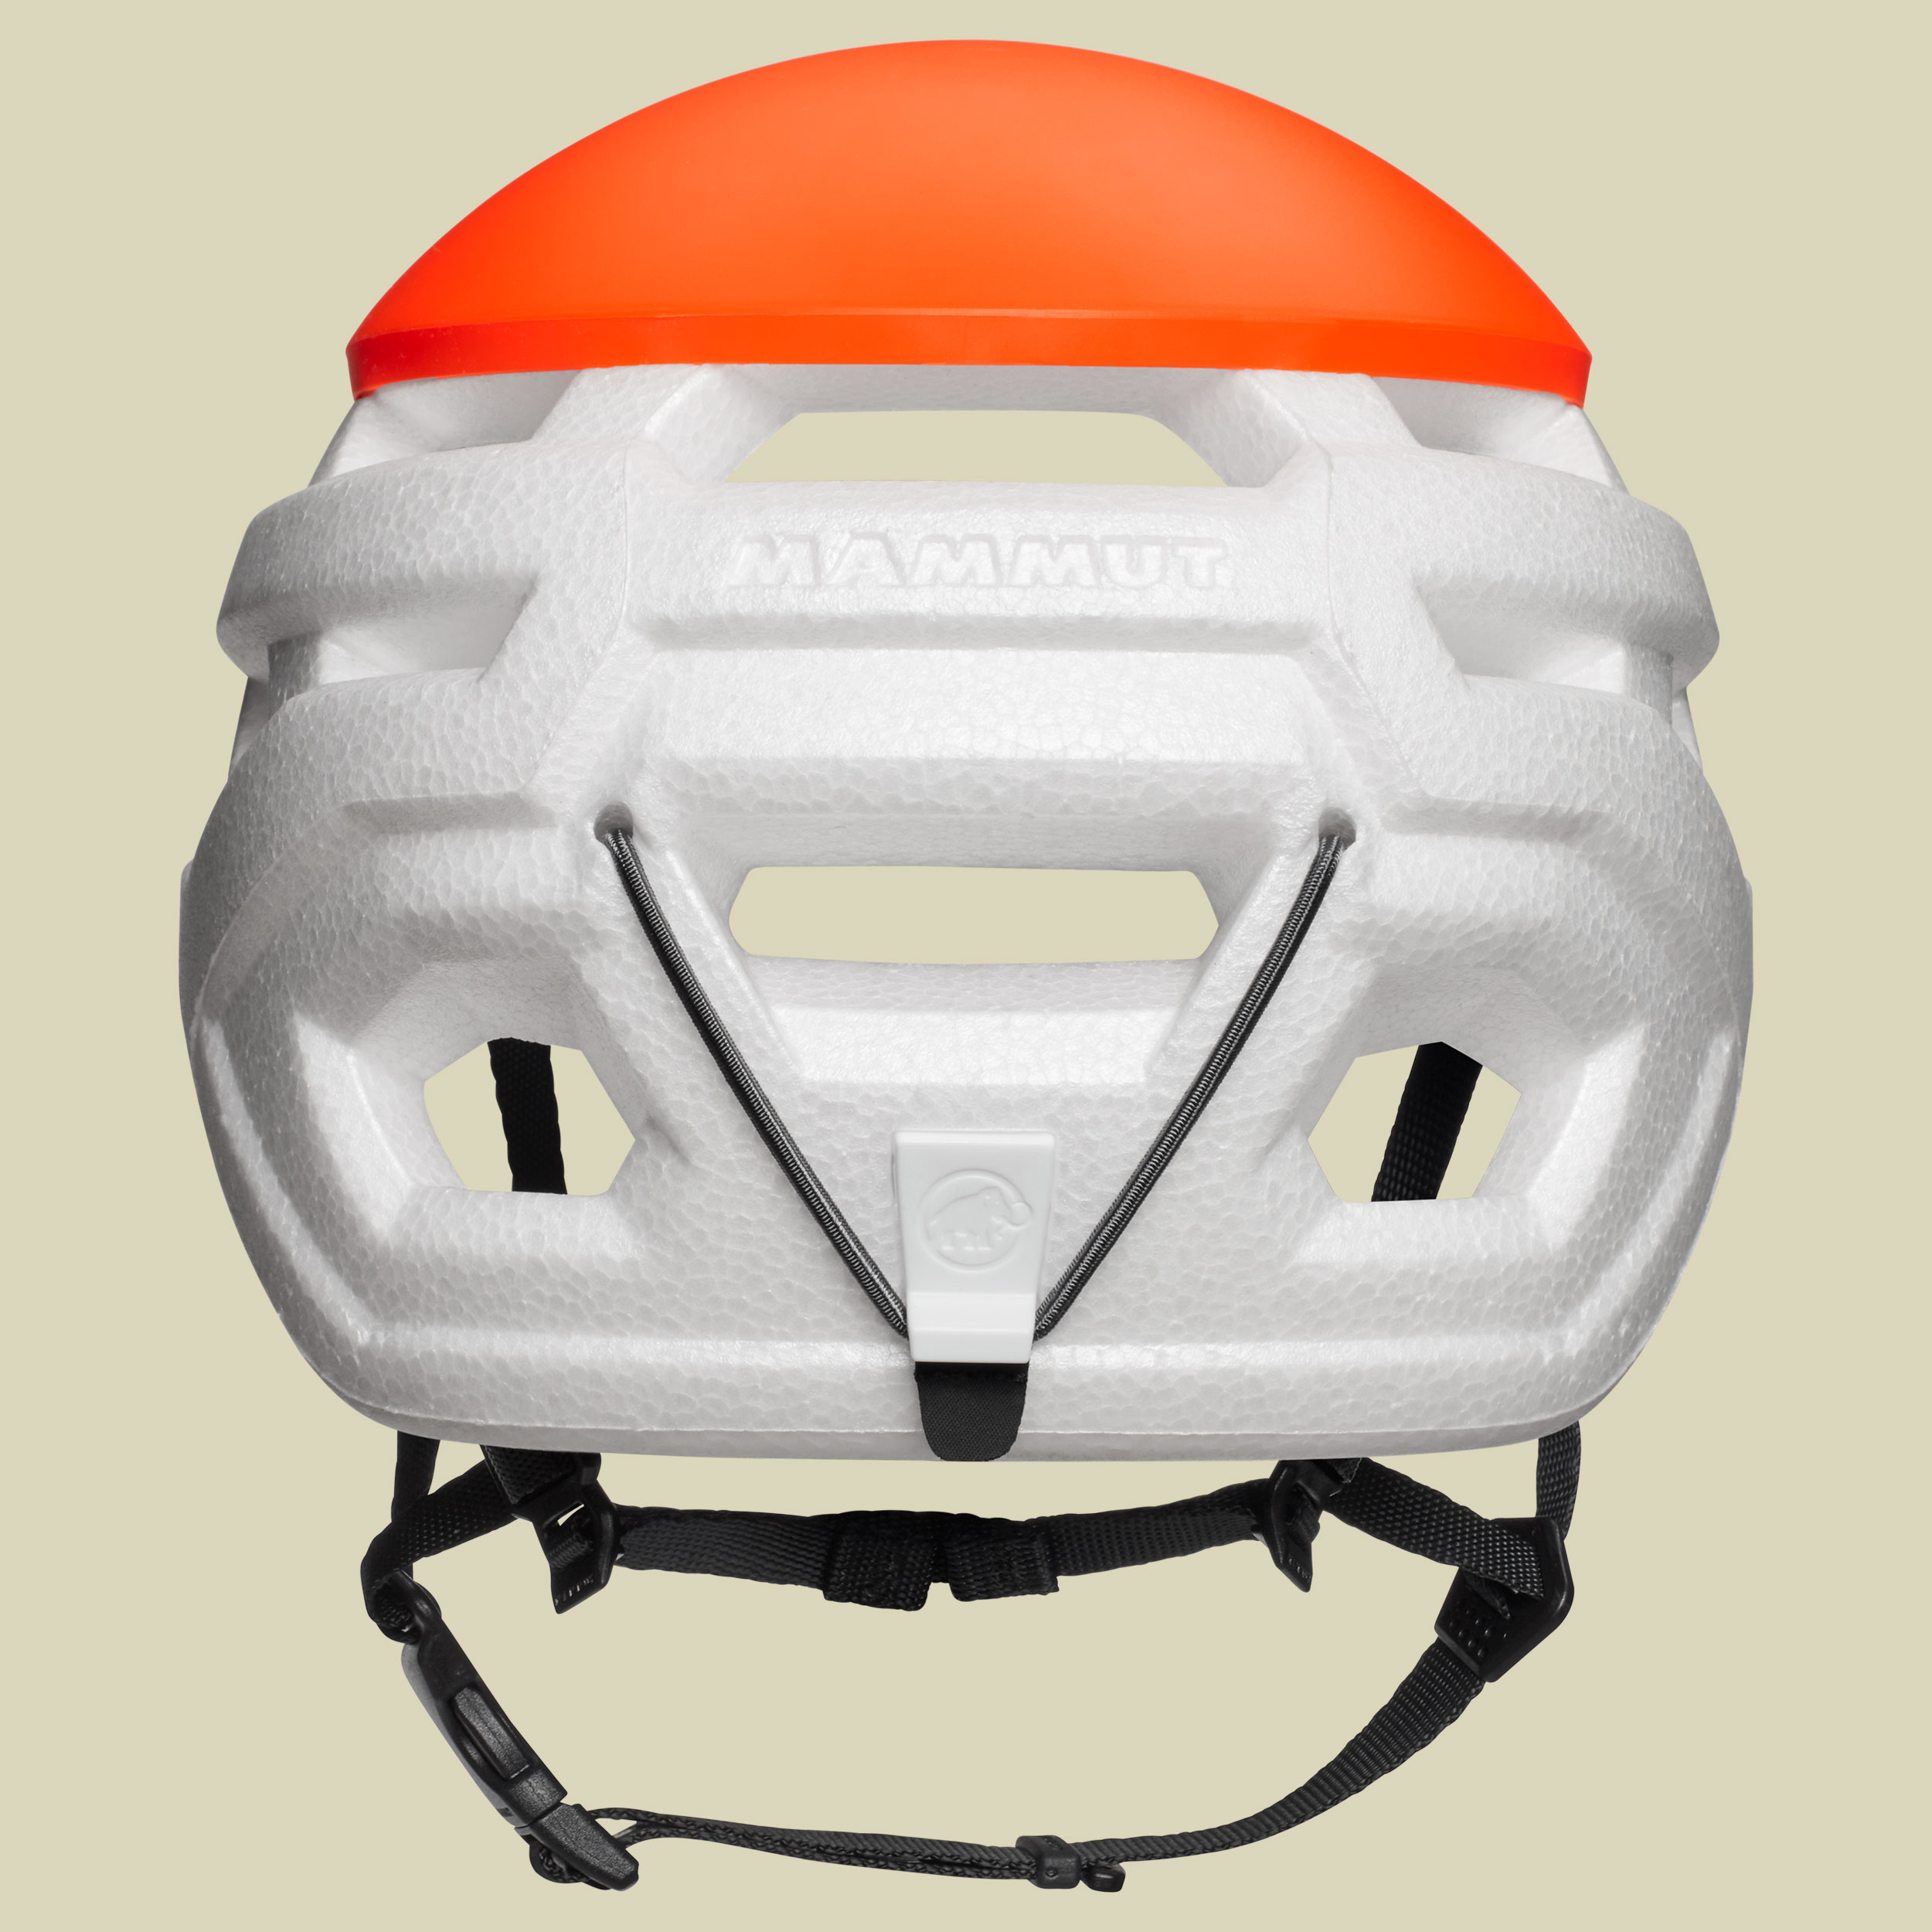 Wall Rider Kopfumfang 52-57 cm Farbe vibrant orange